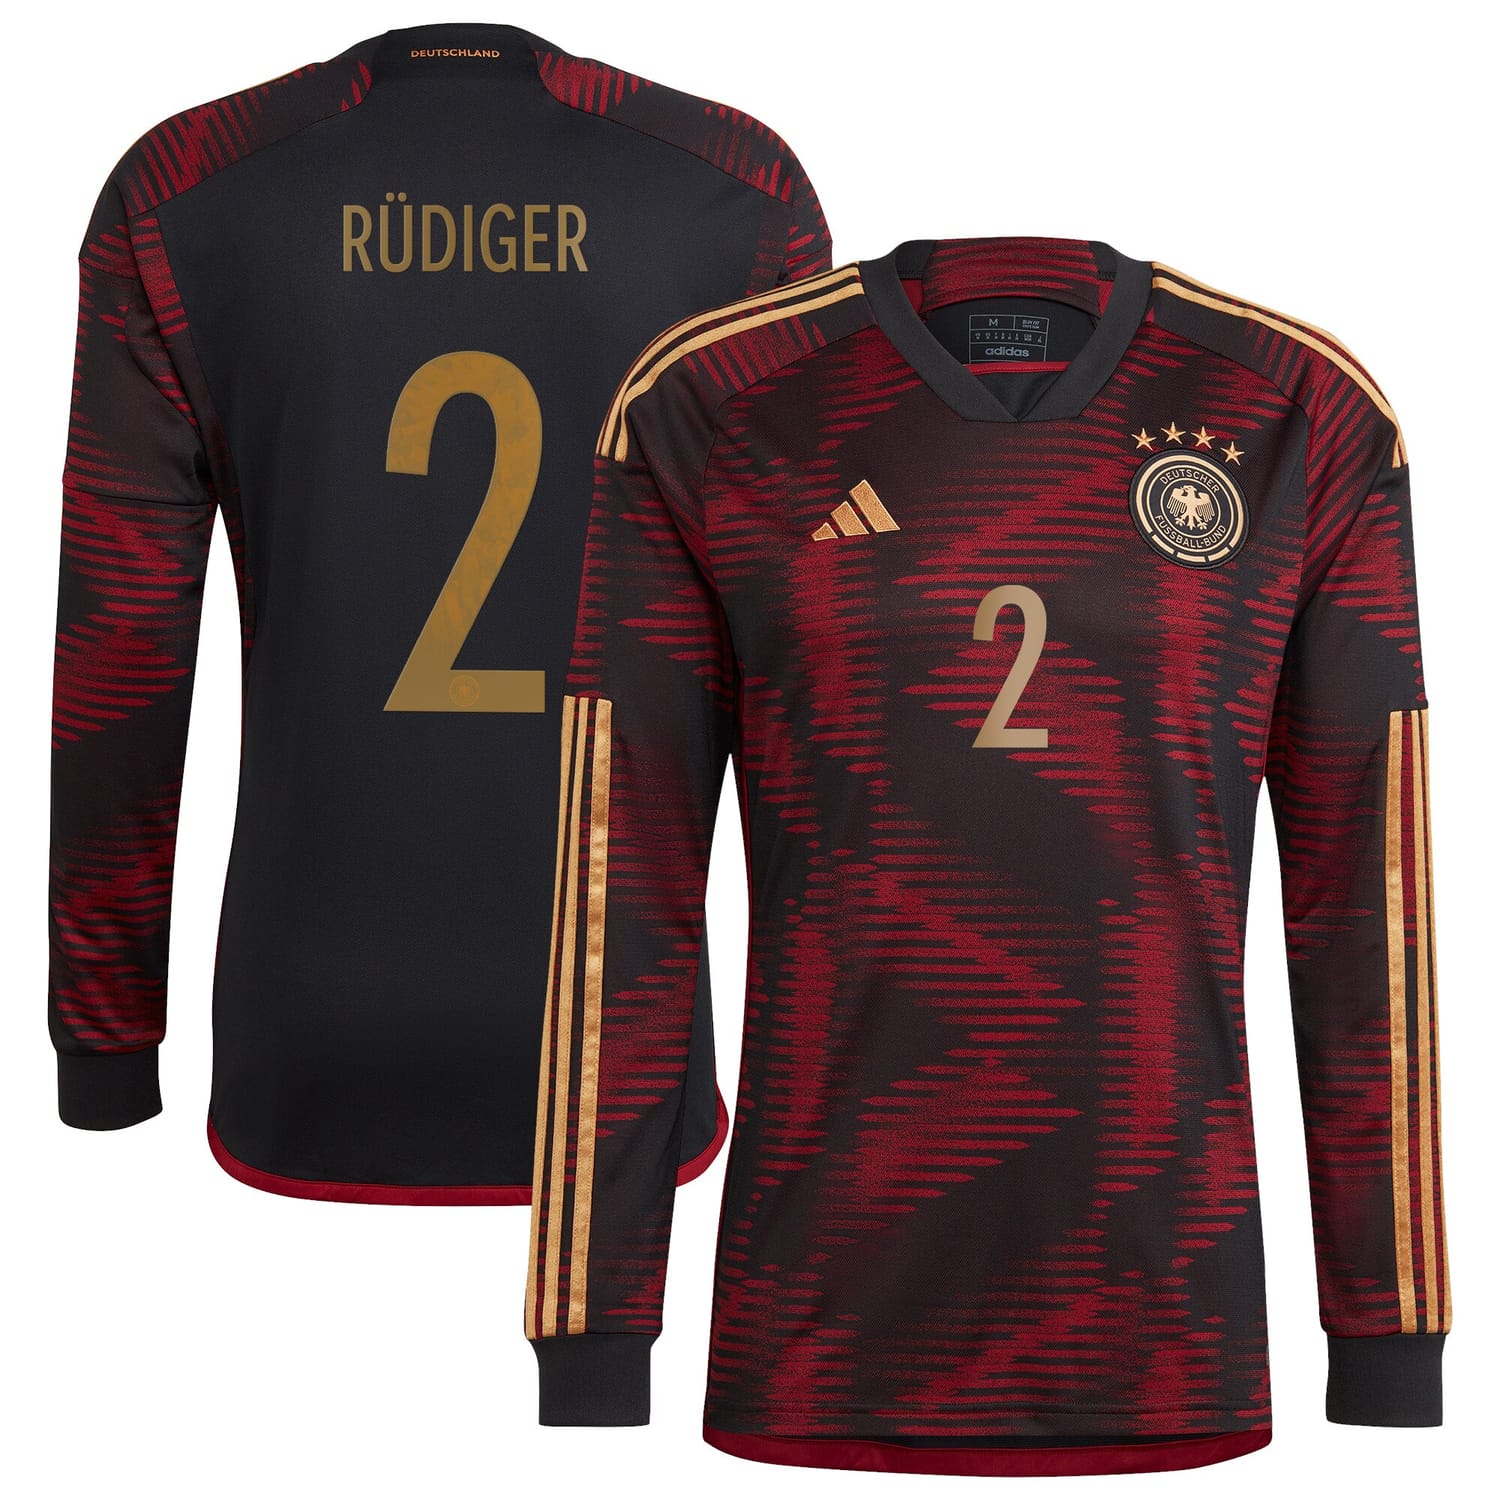 Germany National Team Away Jersey Shirt Long Sleeve player Antonio Rüdiger 2 printing for Men